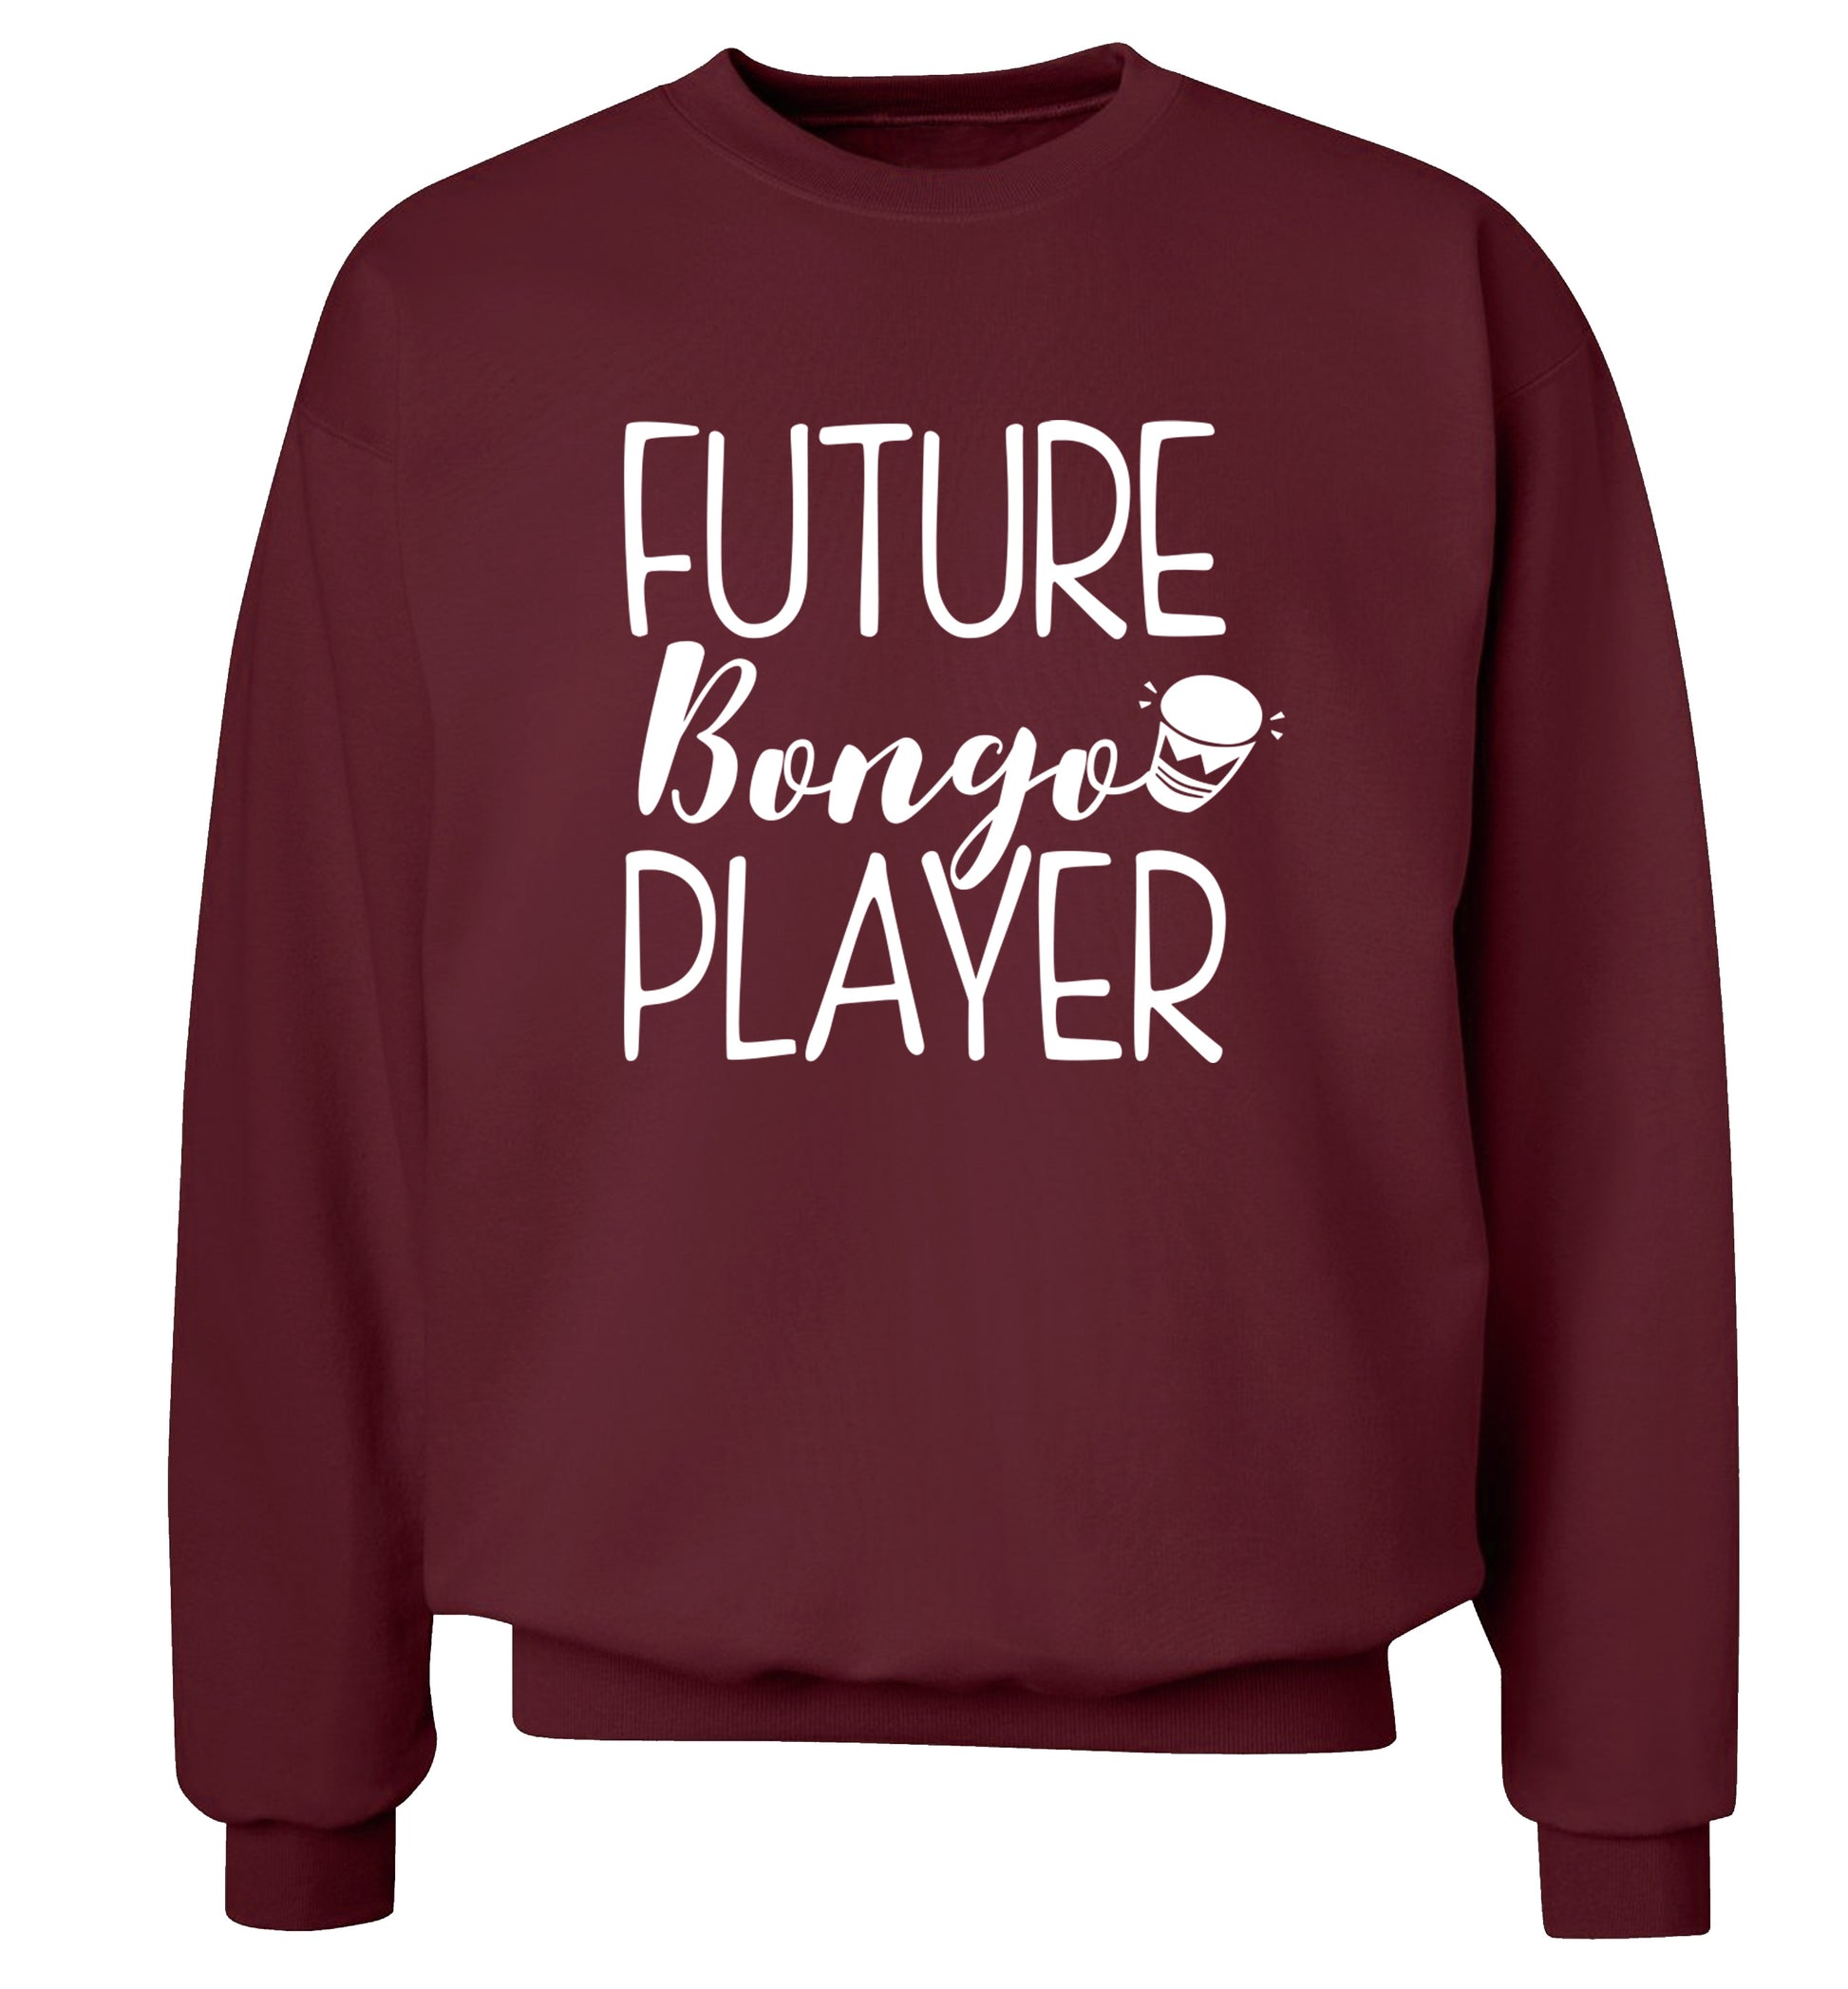 Future bongo player Adult's unisex maroon Sweater 2XL